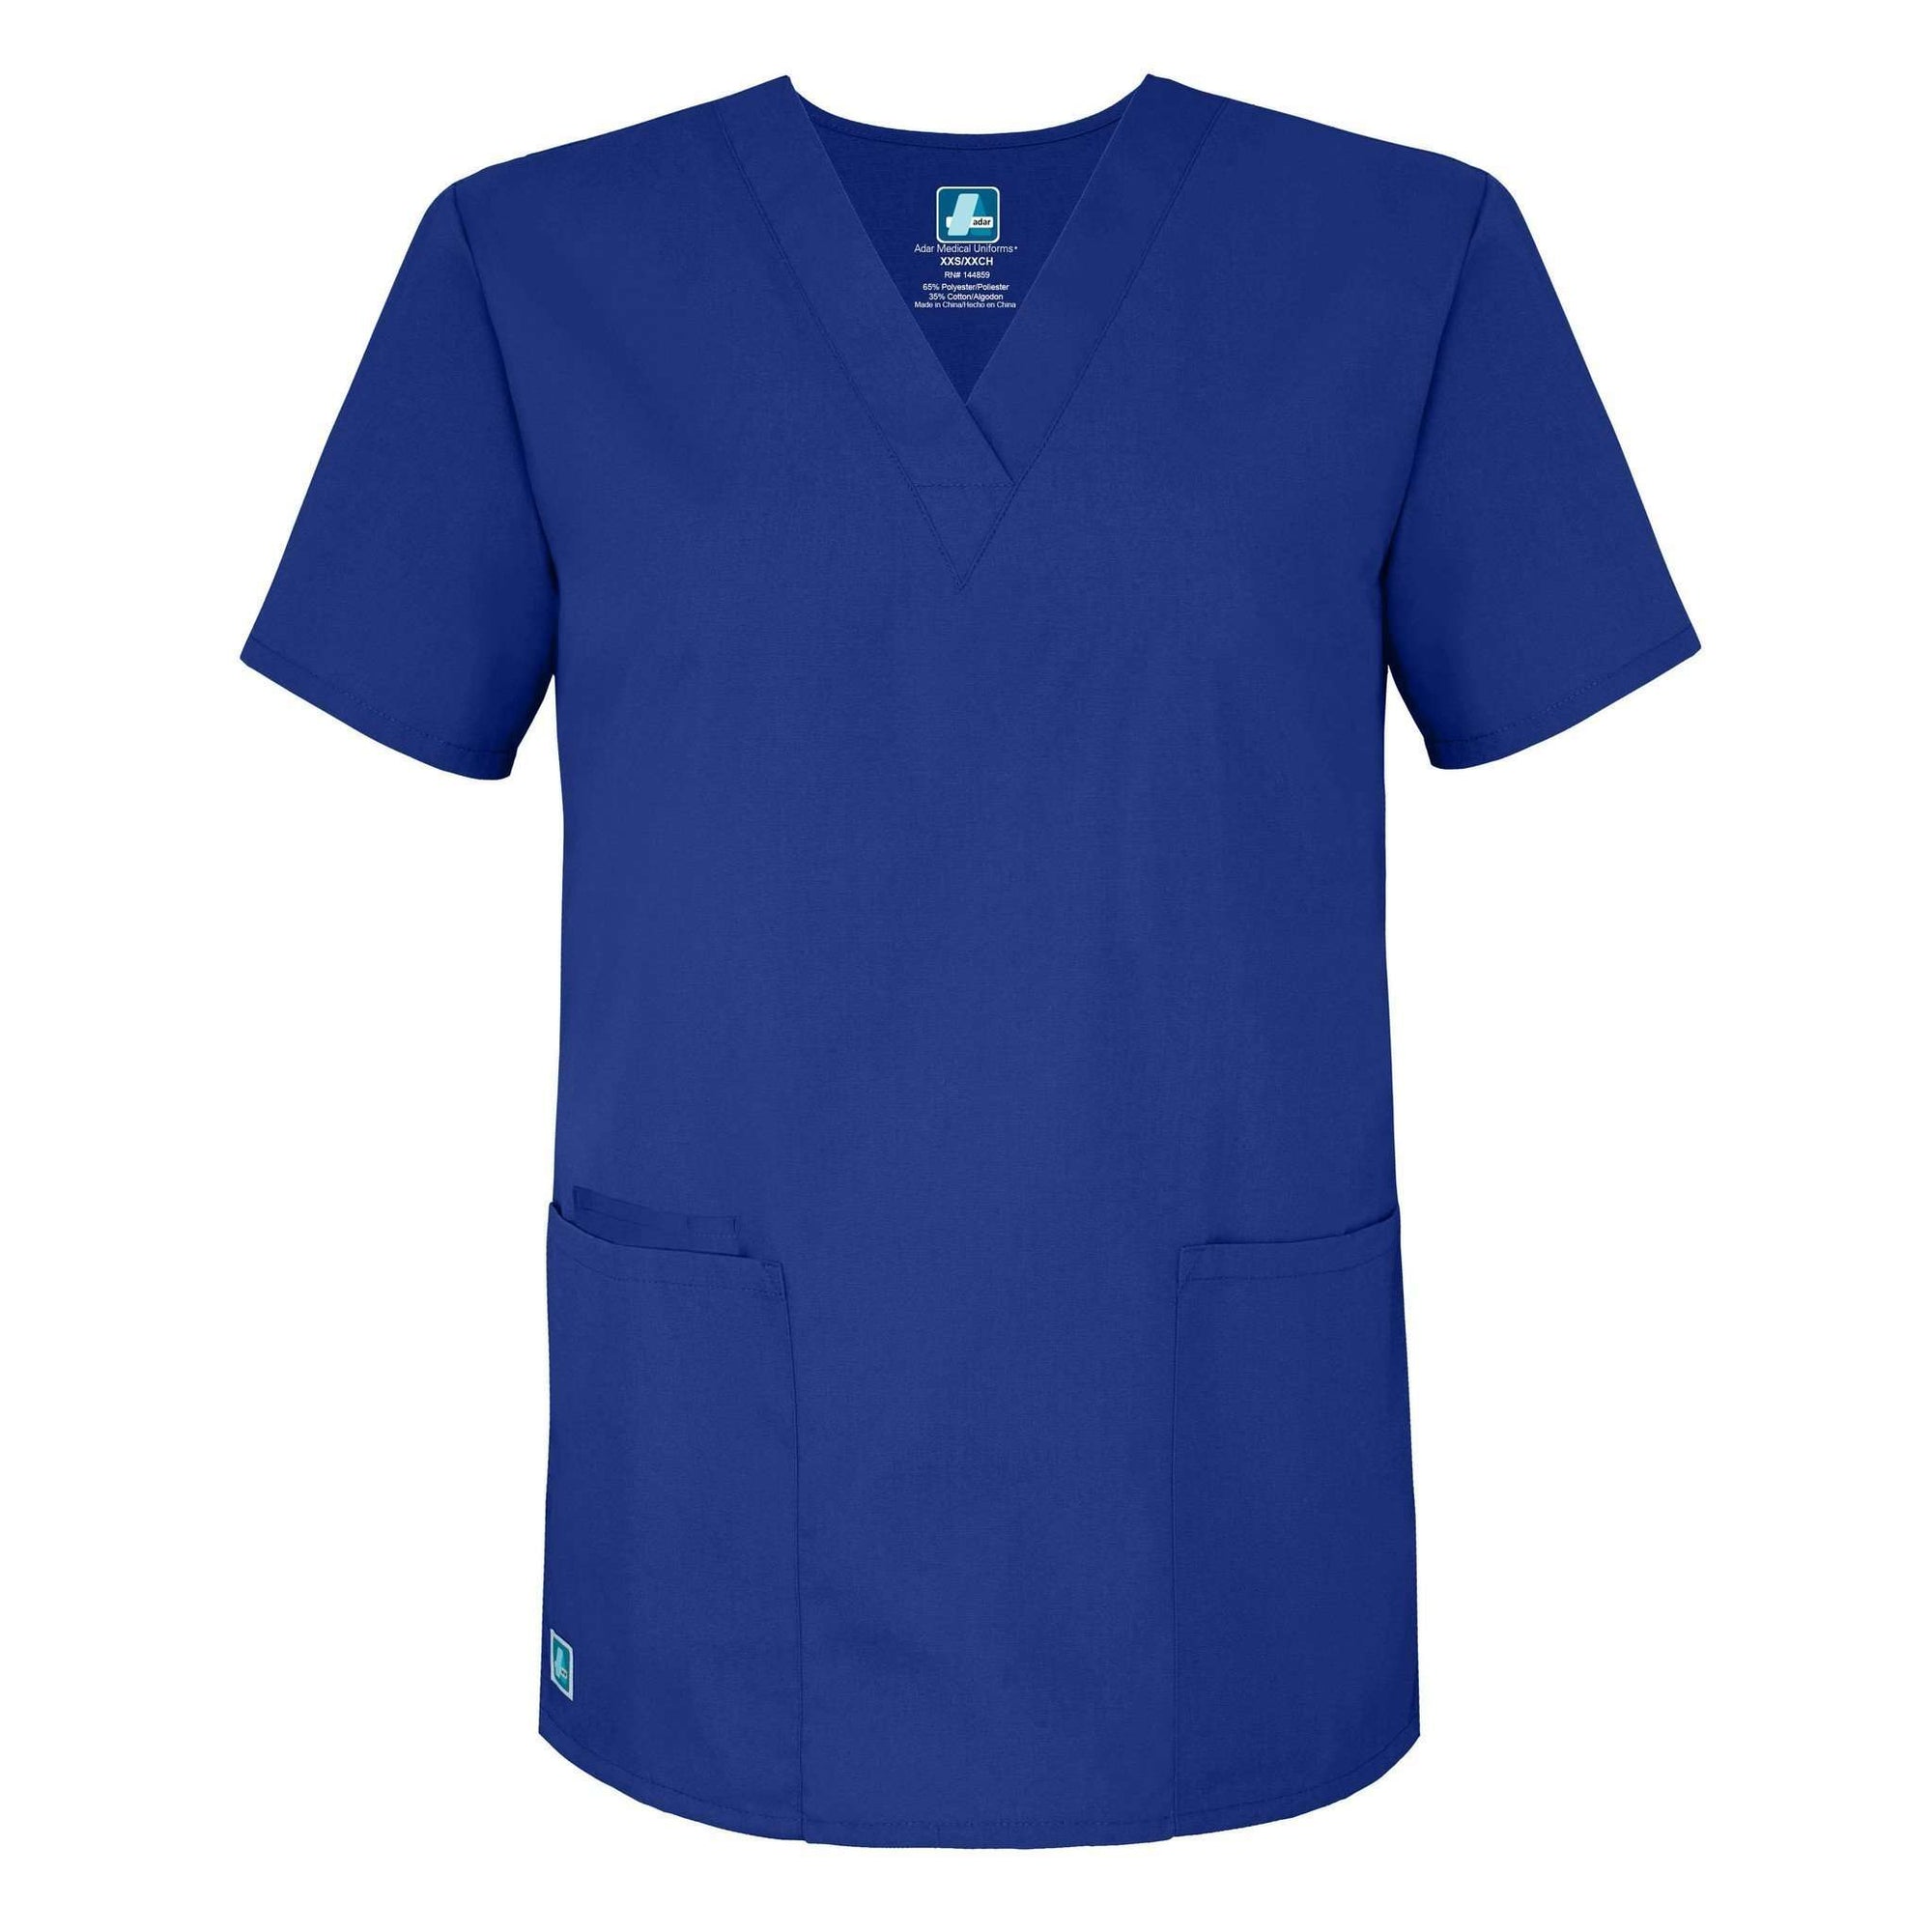  Adar - uniforms Medical Uniform Tops uniforms online Adar Universal Unisex V-Neck 2 Pocket Scrub Top Royal Blue S - SchoolUniforms.com